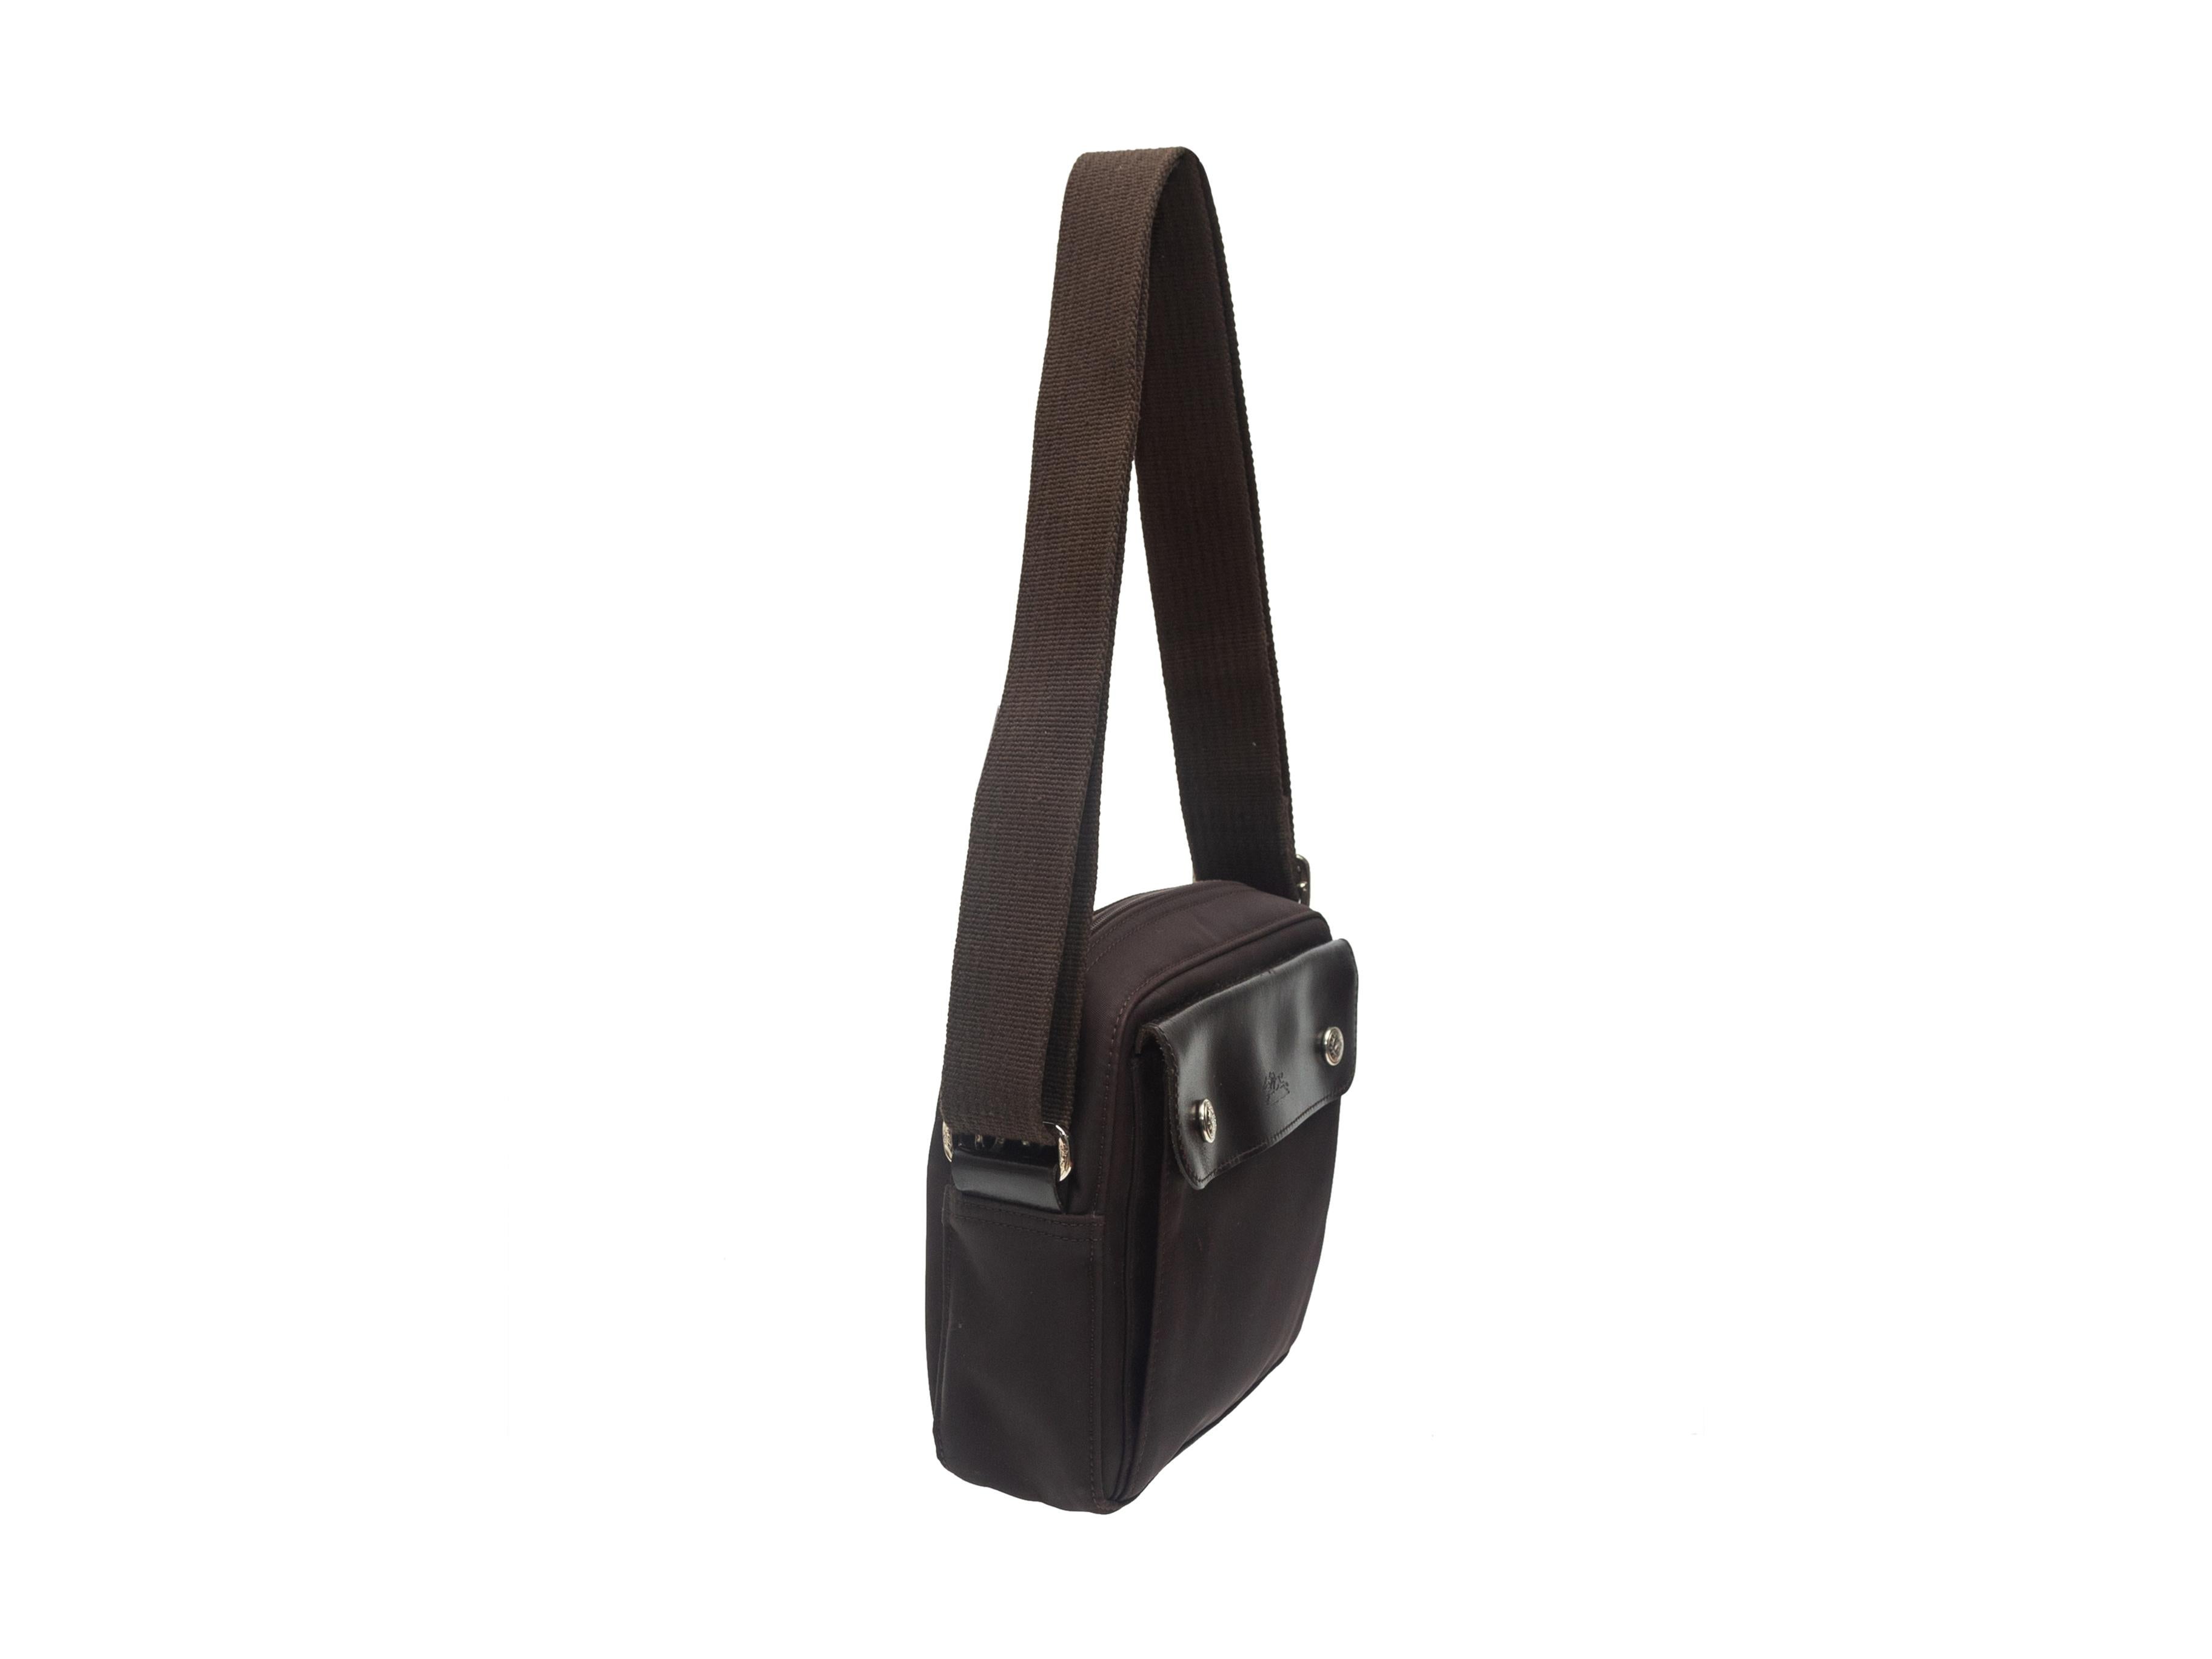 Product details: Brown nylon crossbody bag by Longchamp. Adjustable strap. Flap pocket at exterior front. Zip closure at top. 8